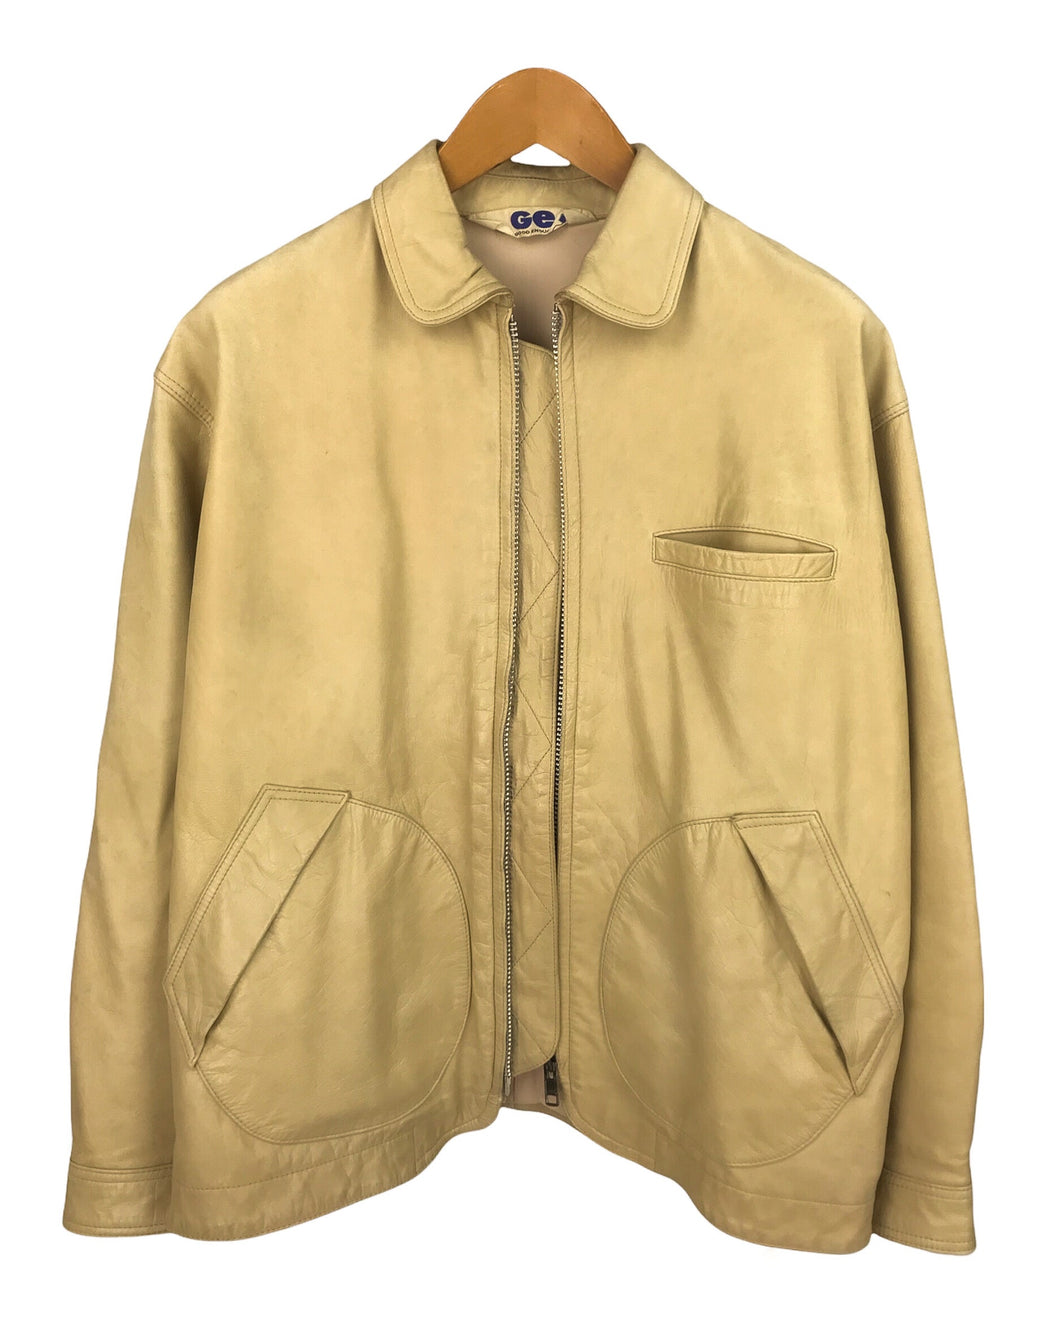 GOODENOUGH Leather Jacket (1995)(M-L)